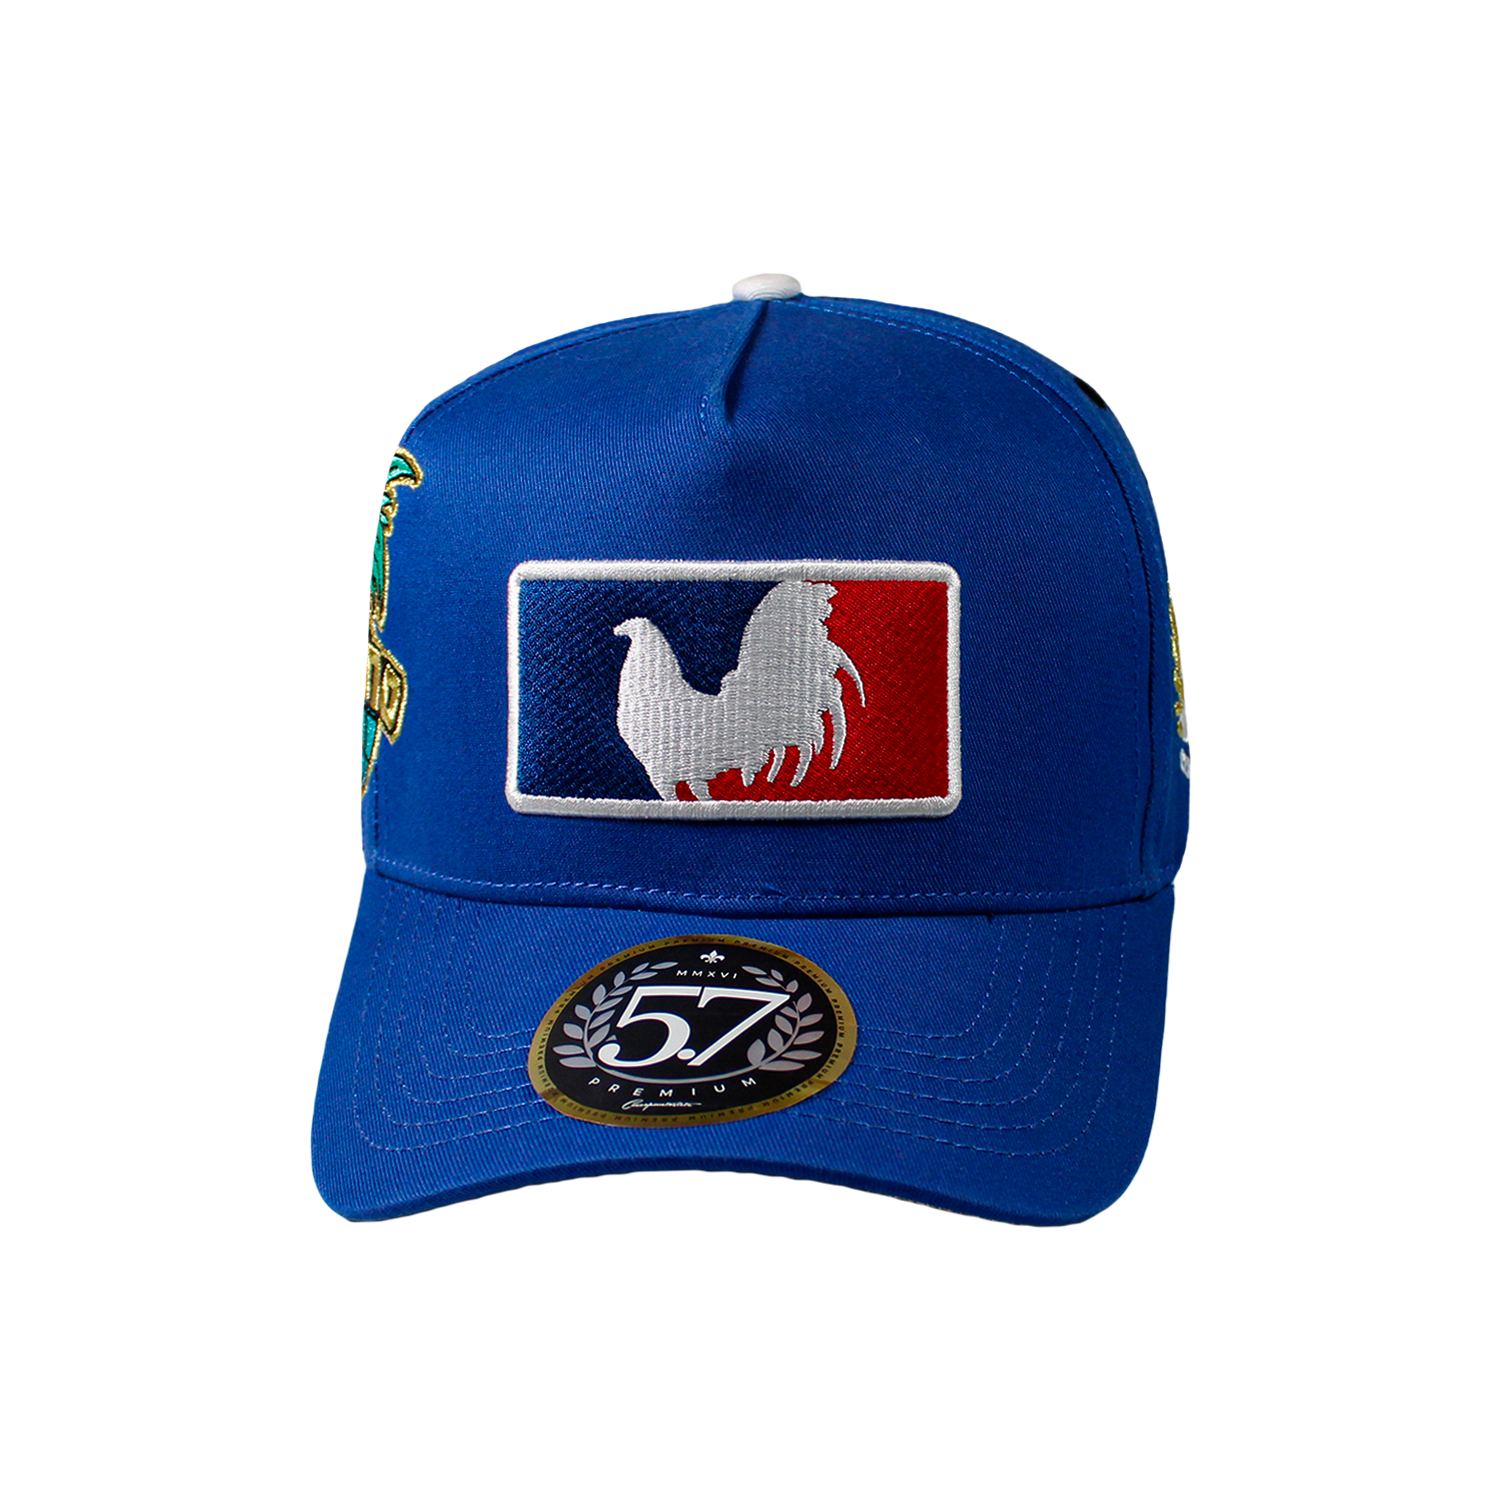 Gallo Béisbol World Series Blue Premium